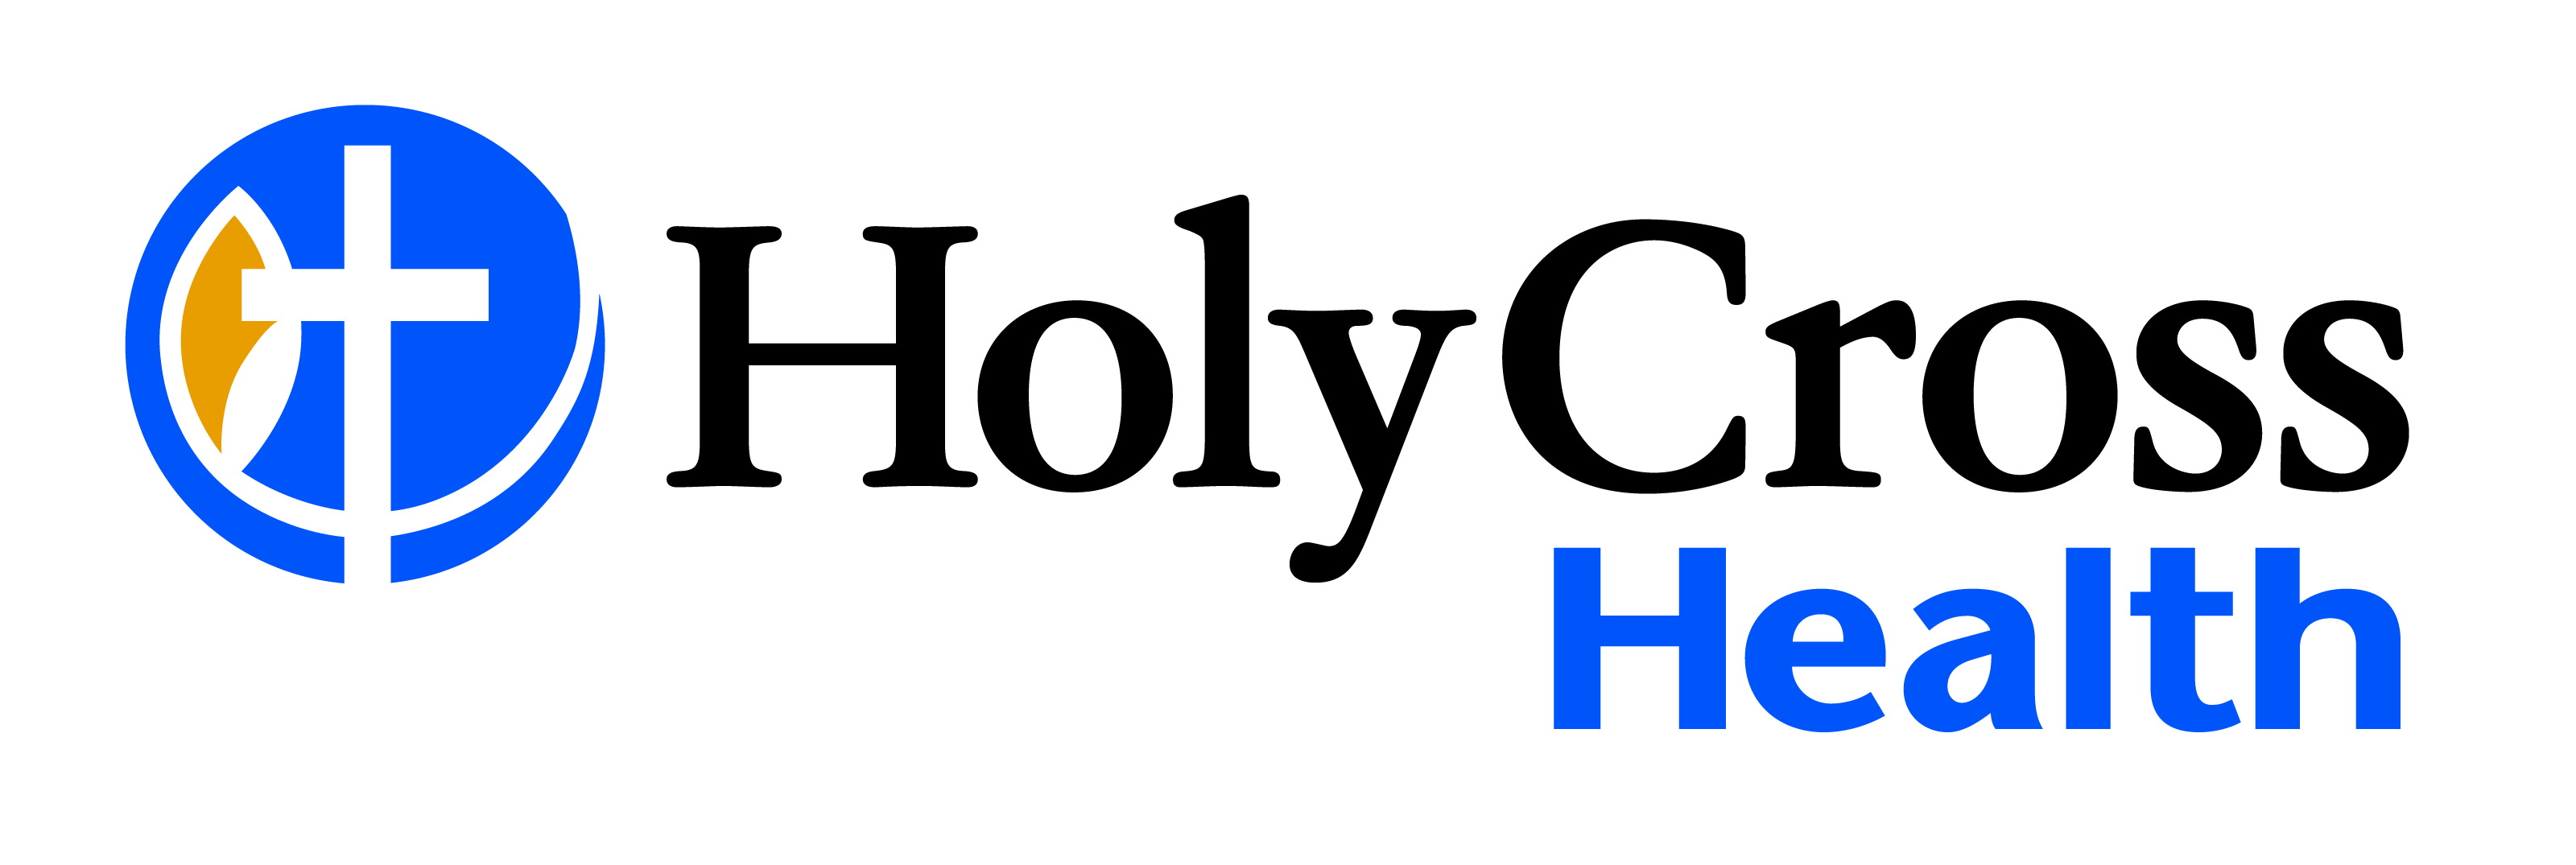 A123 Holy Cross Health (Tier 2)